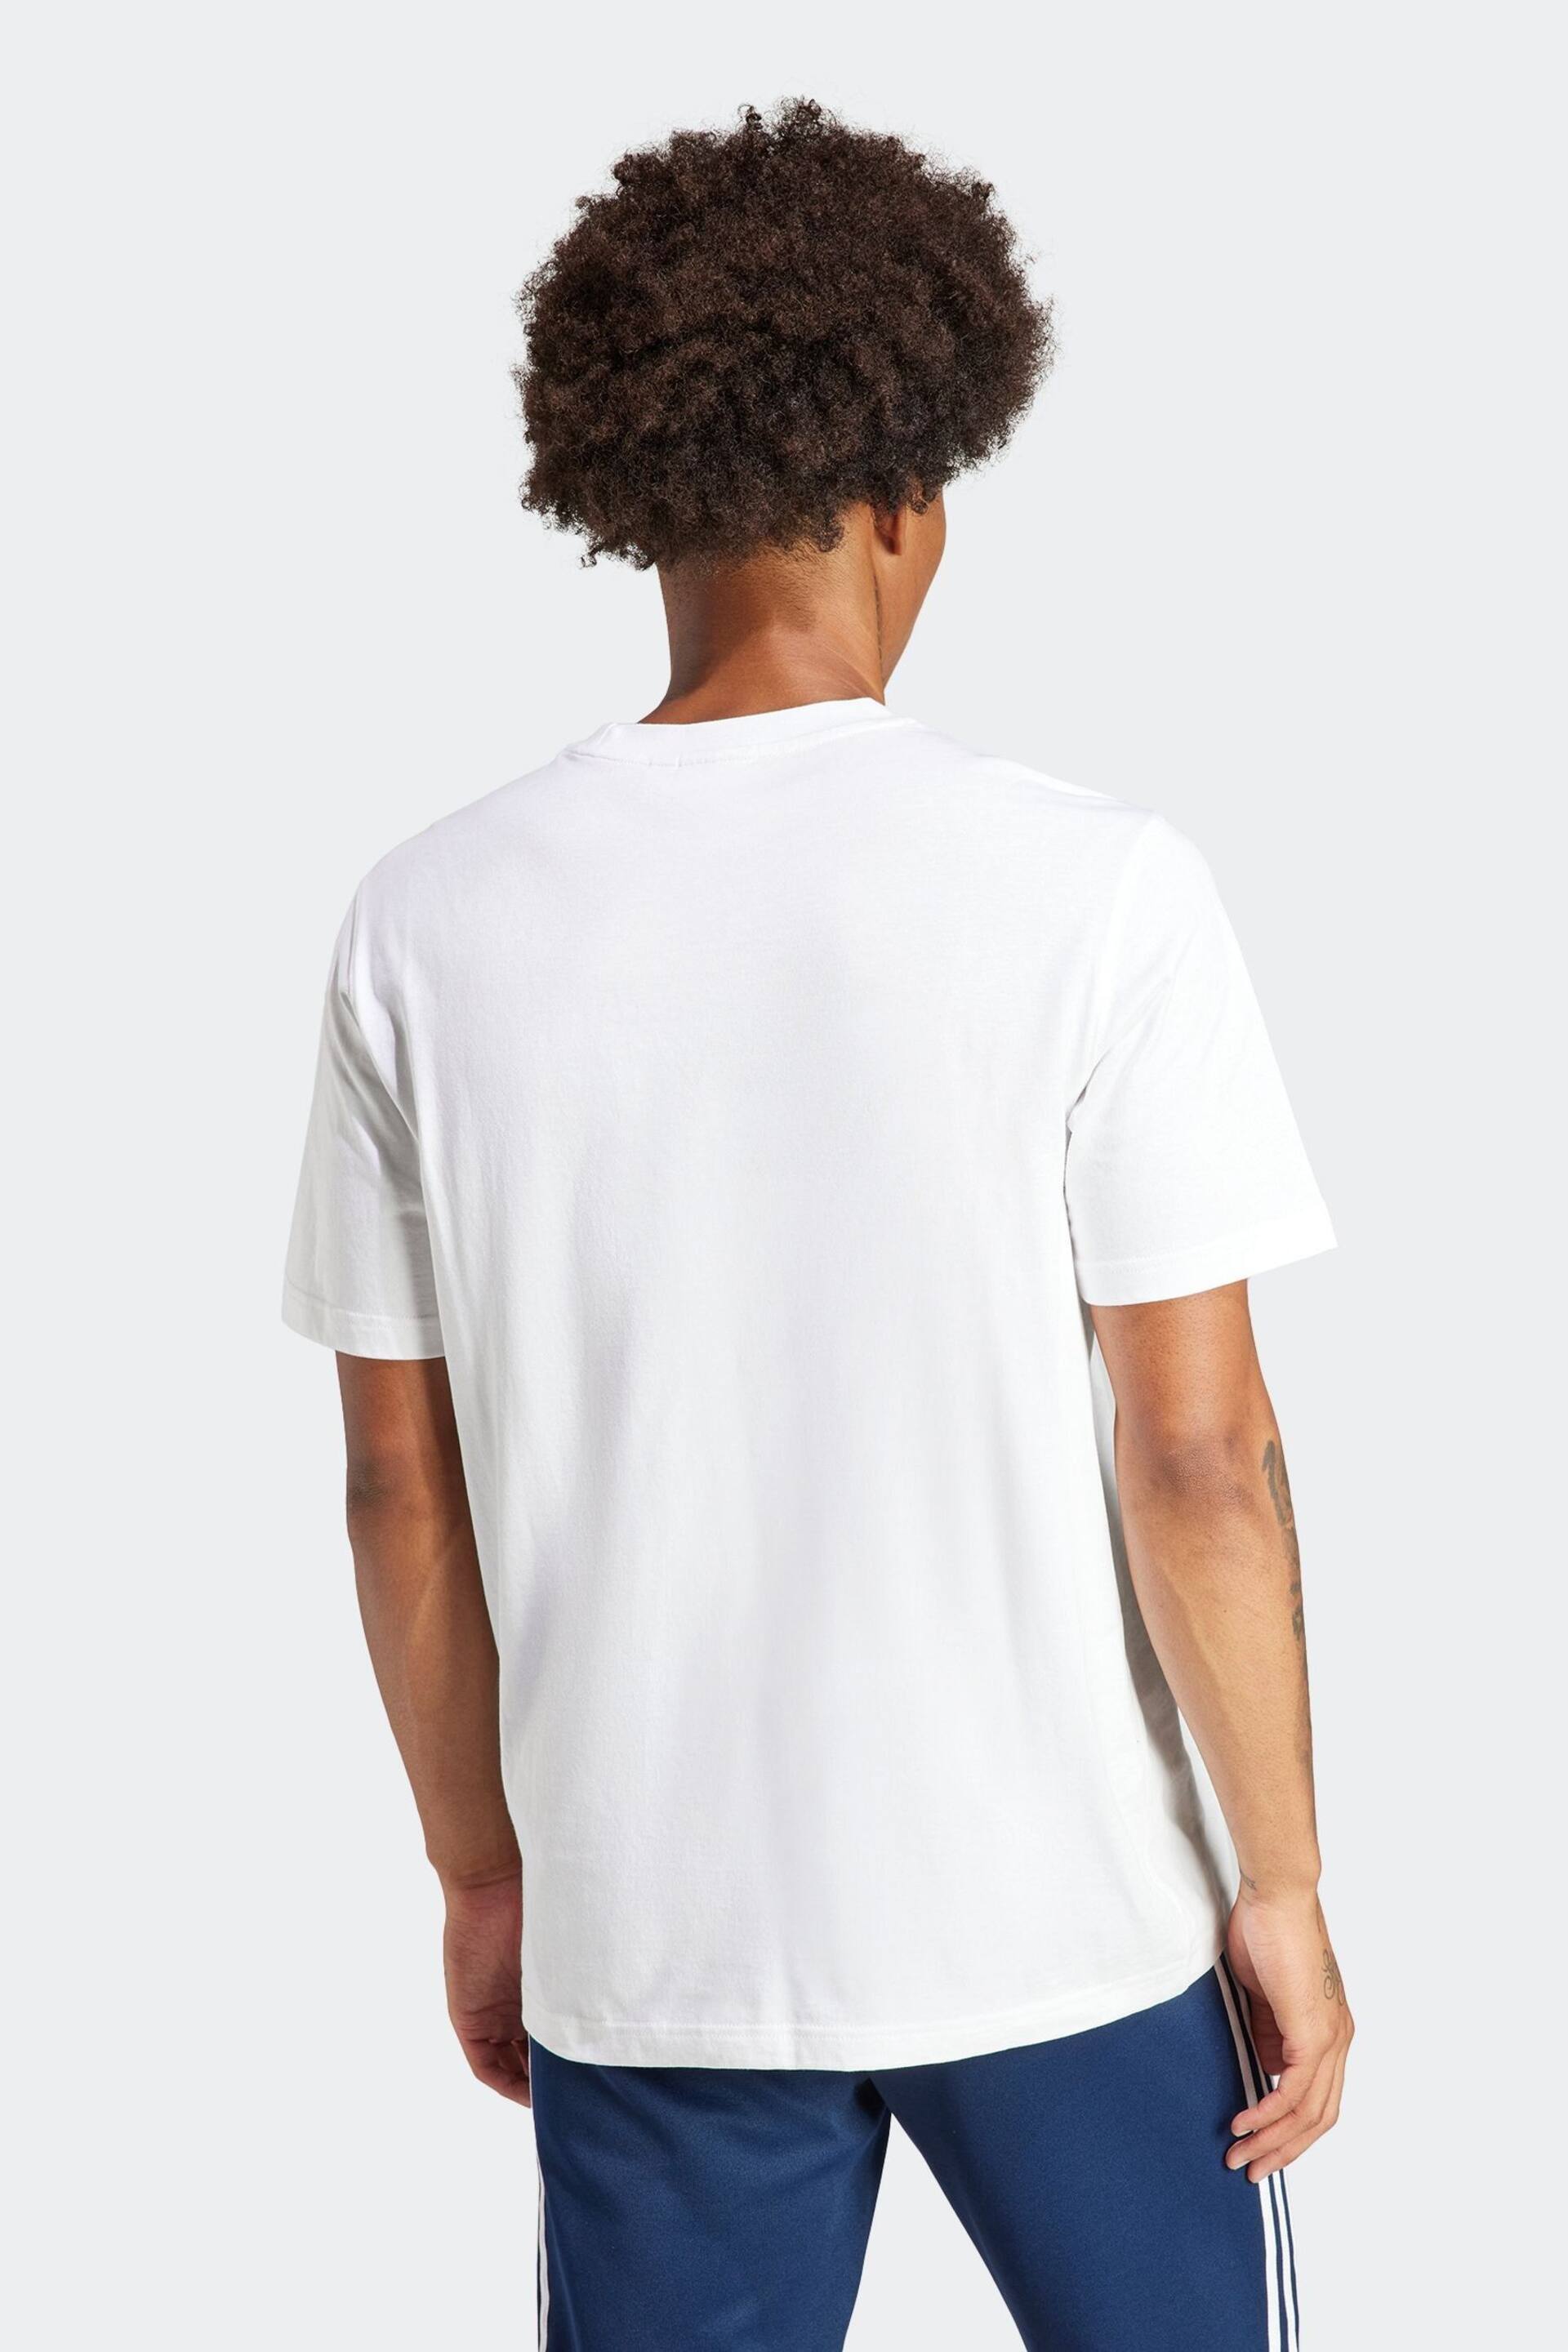 adidas Originals Trefoil T-Shirt - Image 4 of 7